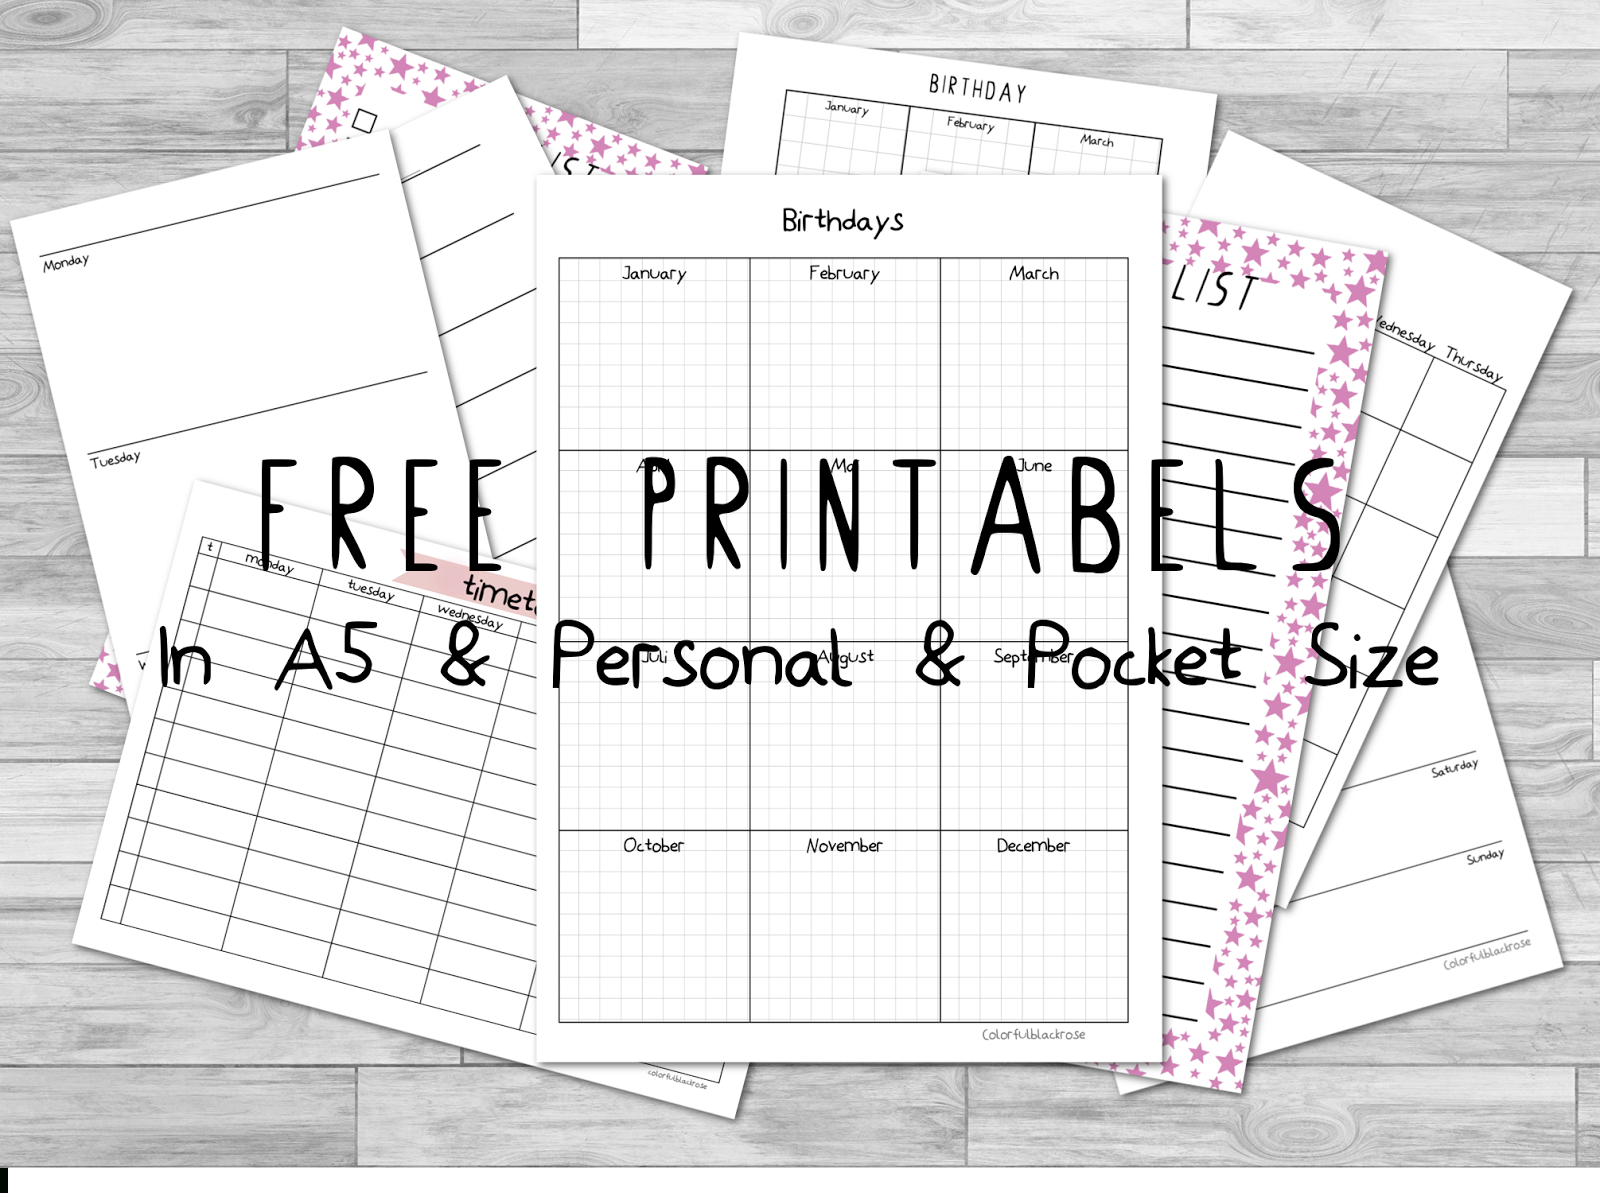 Filofax | Free Printables | Colorfulblackrose - Free Printables Com